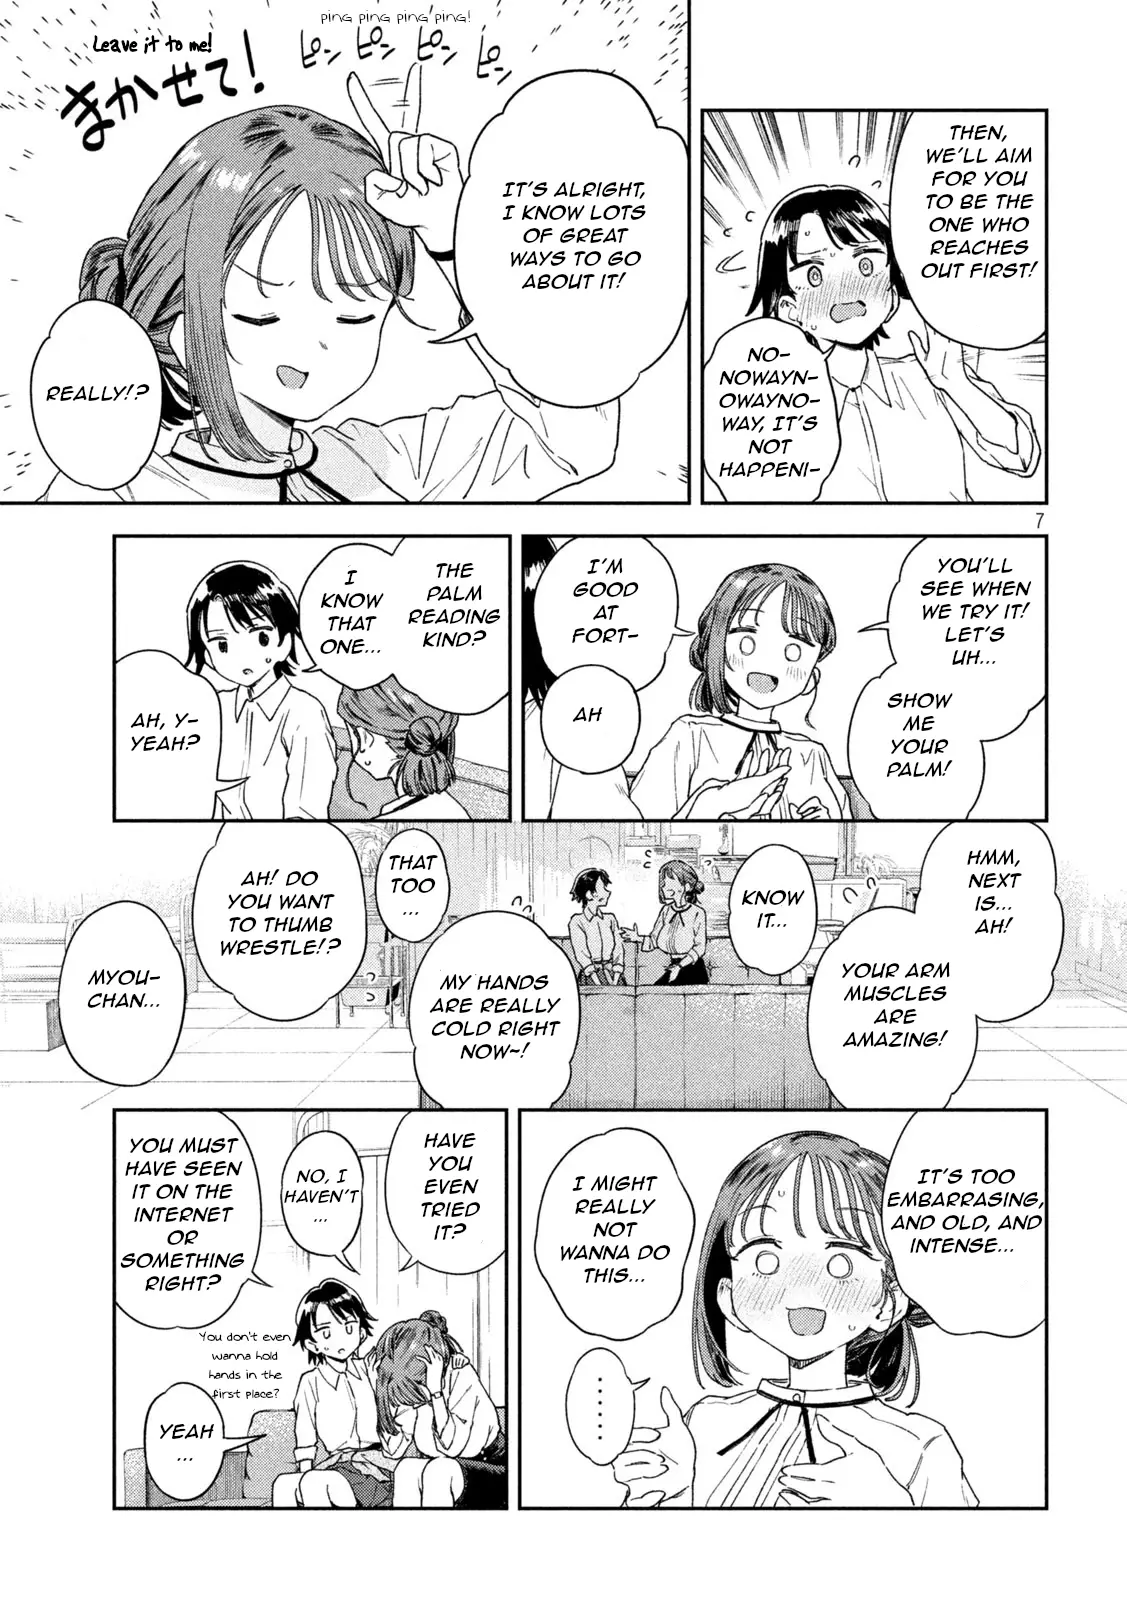 Miyo-Chan Sensei Said So - 6 page 7-cfab54c1